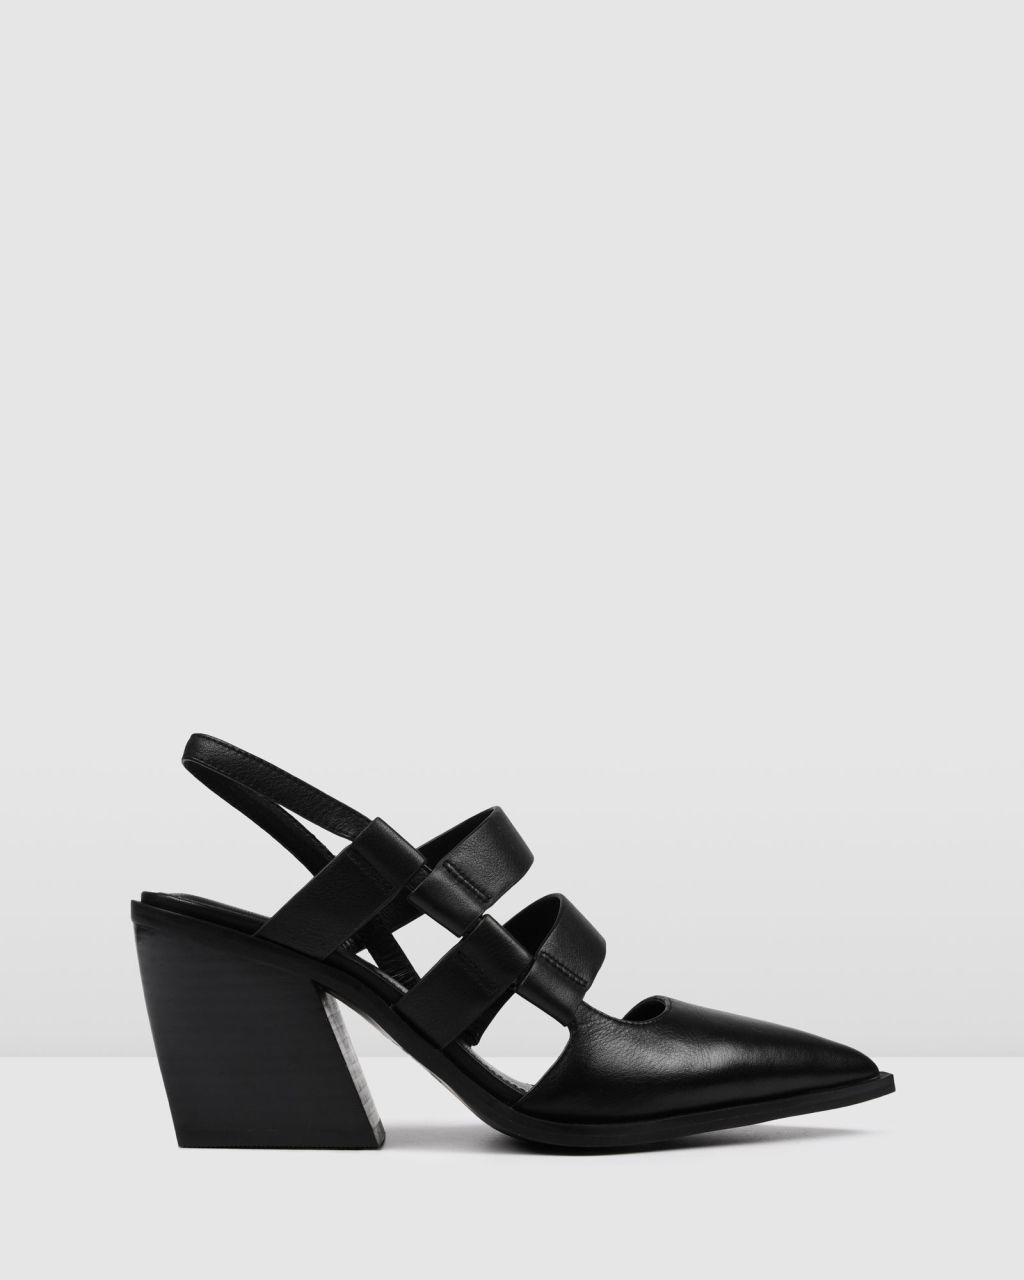 Jo Mercer Flame Mid Heels Shoes | Jo Mercer | Shop online at Westfield